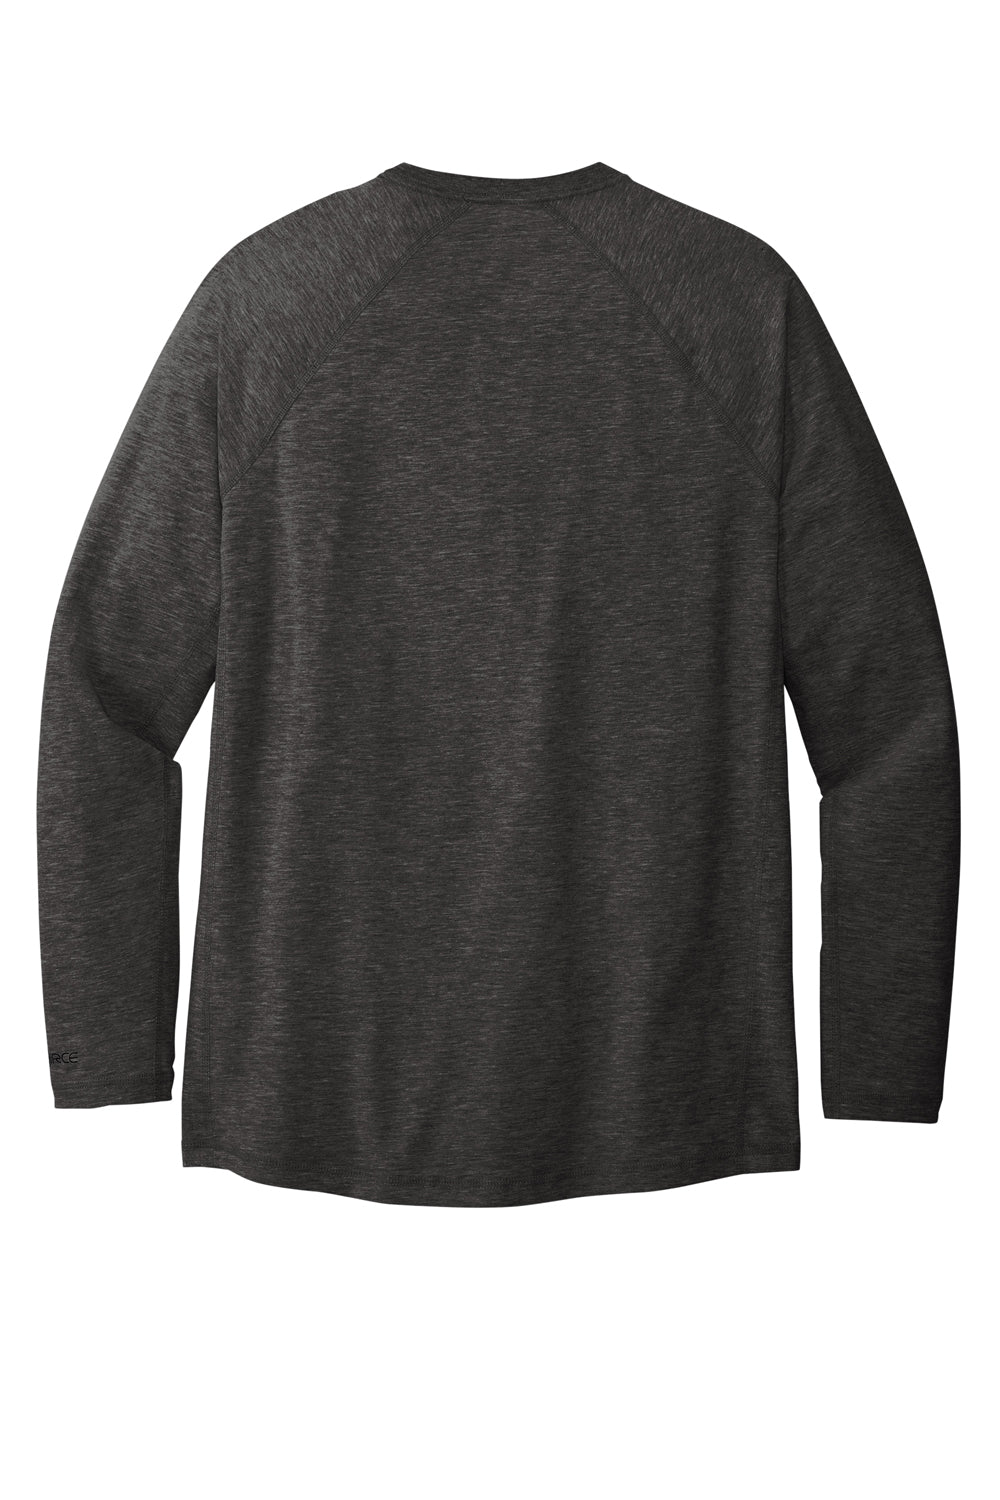 Carhartt CT104617 Mens Force Moisture Wicking Long Sleeve Crewneck T-Shirt w/ Pocket Heather Carbon Grey Flat Back